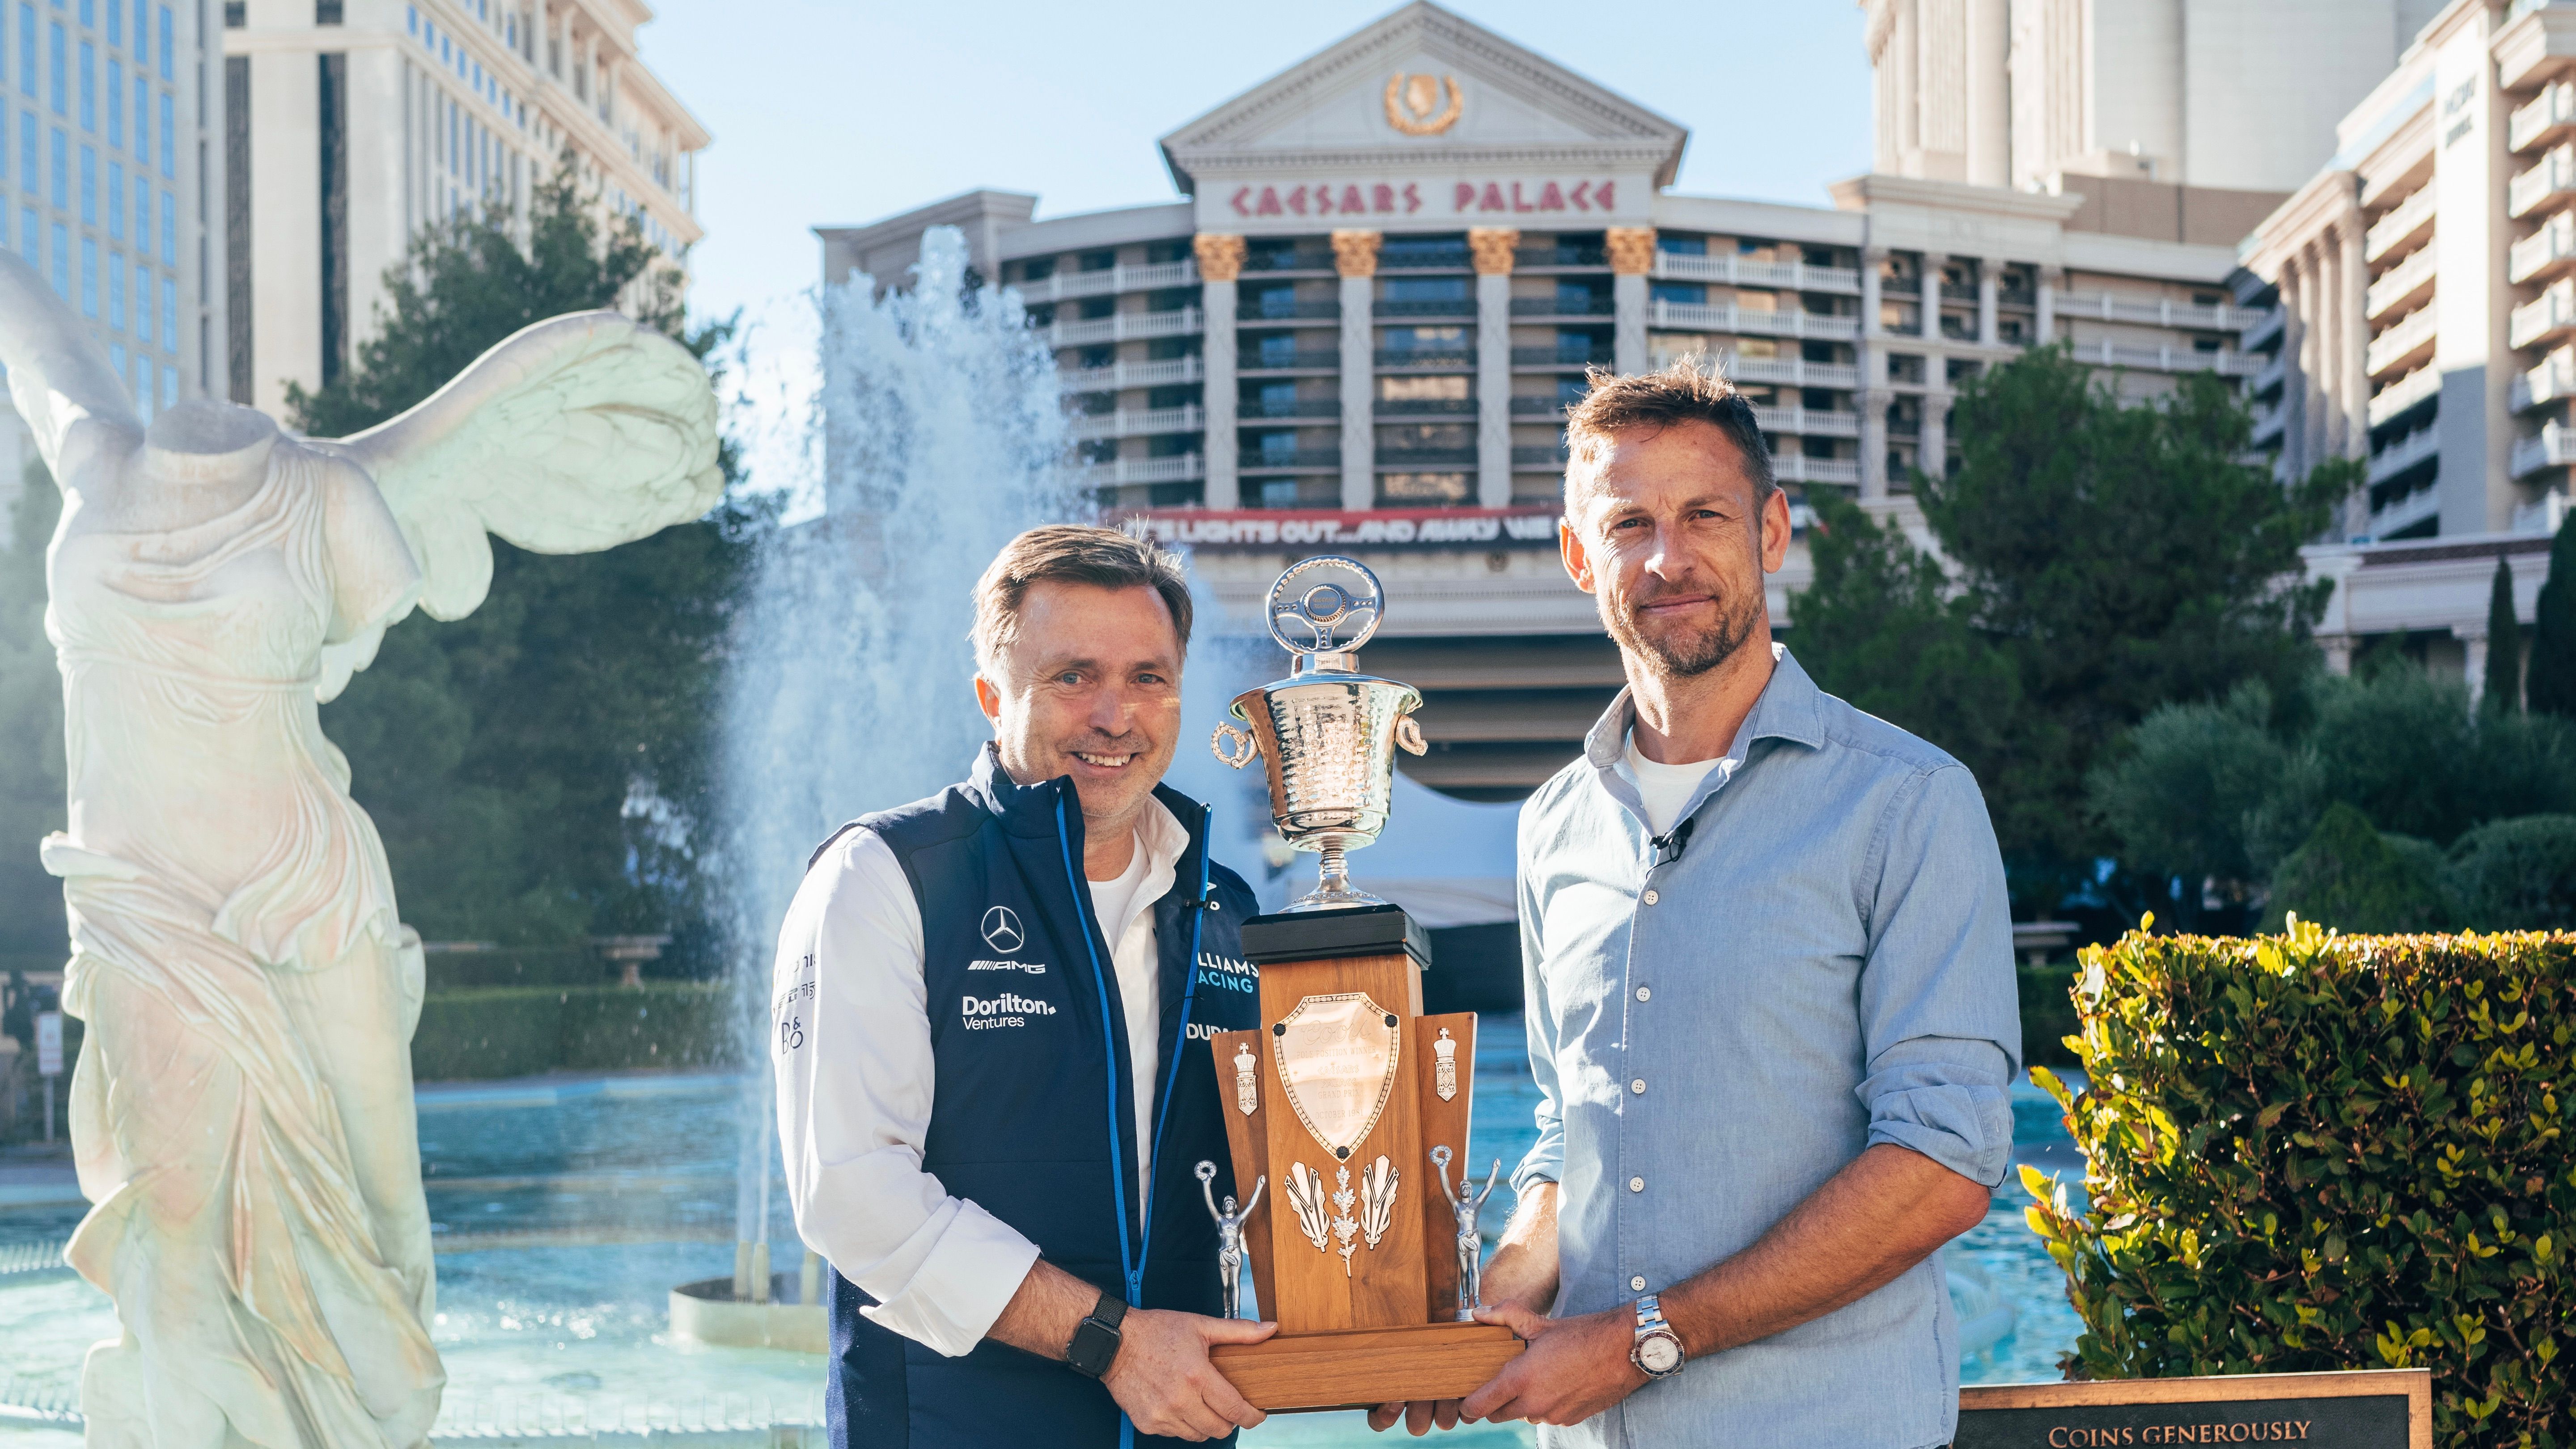 Trophy for the Winner of the Las Vegas GP : r/formula1